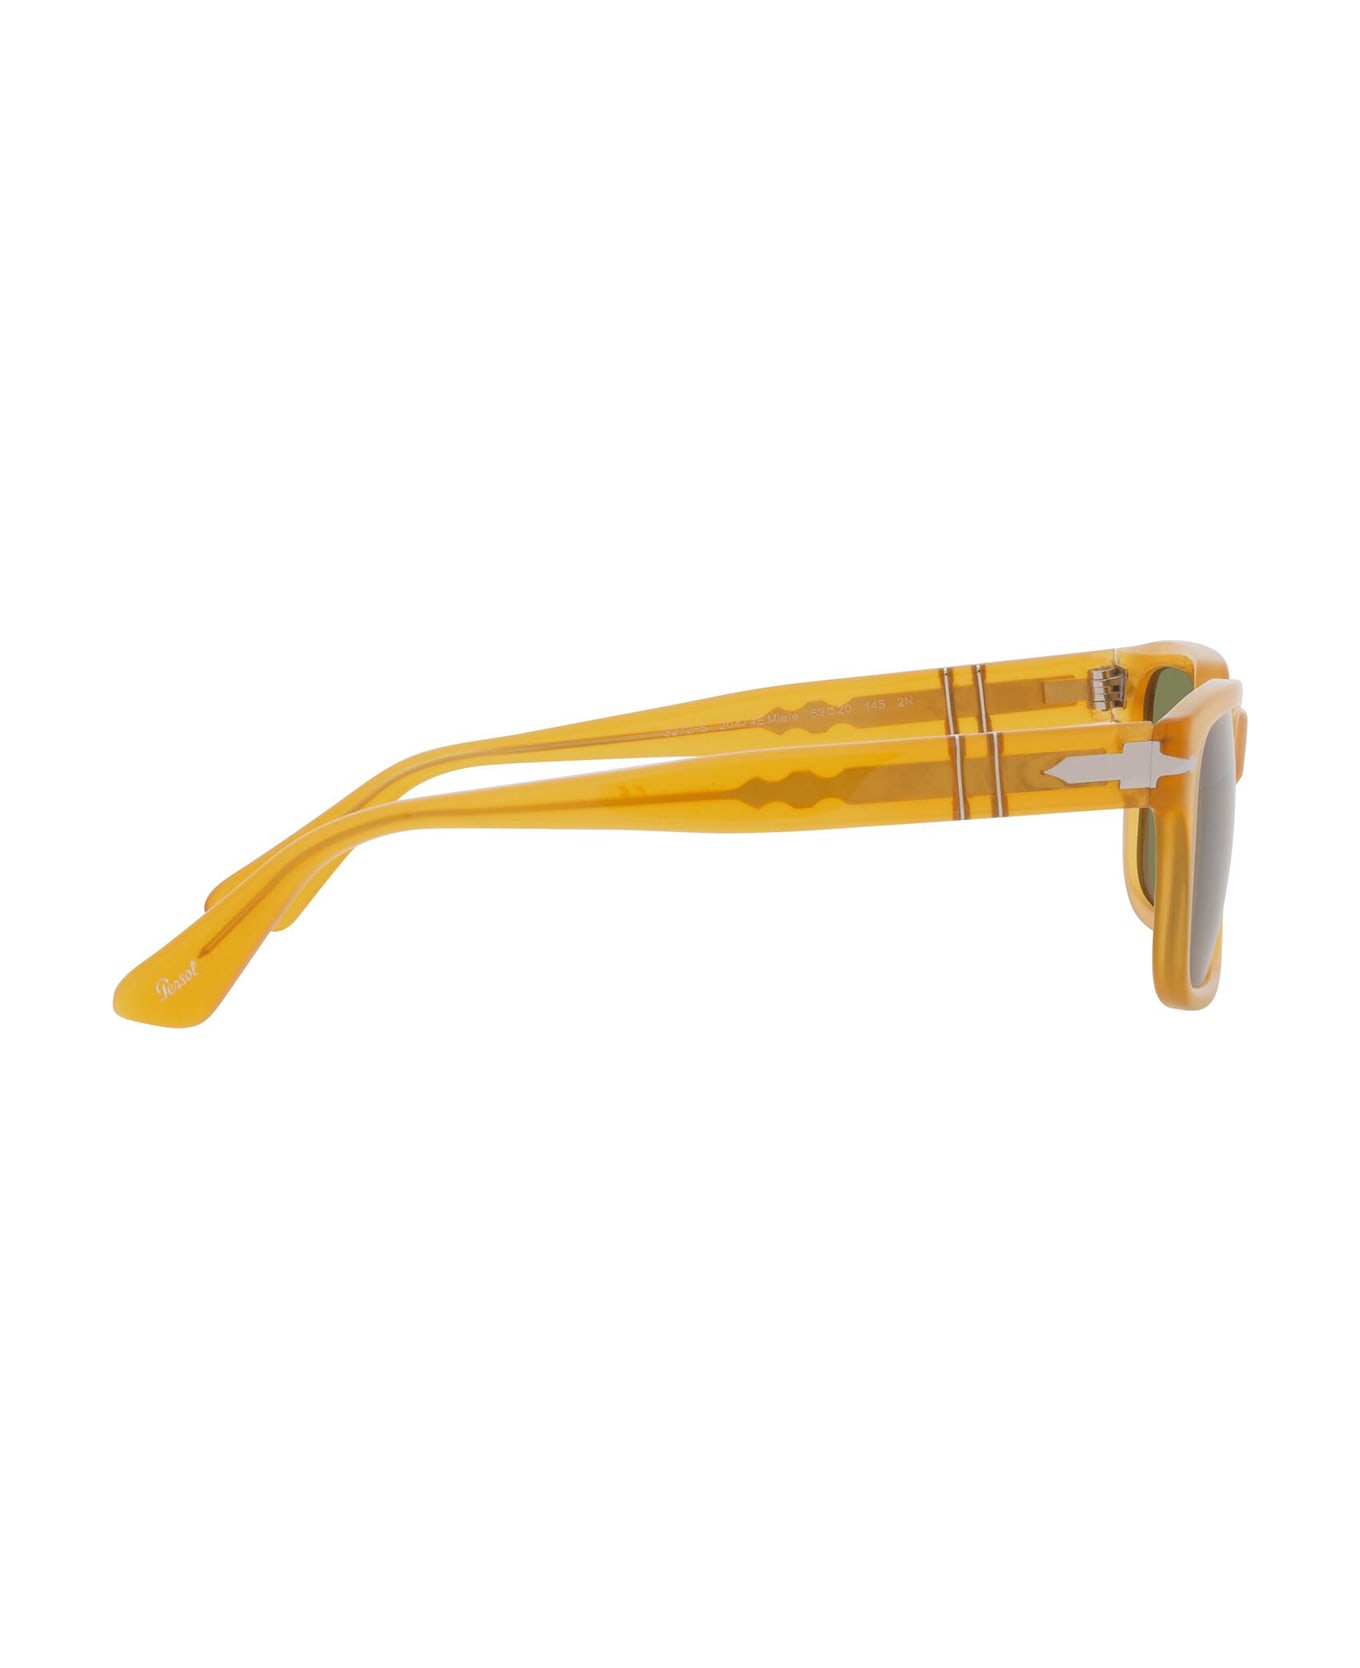 Persol Po3272s Miele Sunglasses - Miele サングラス